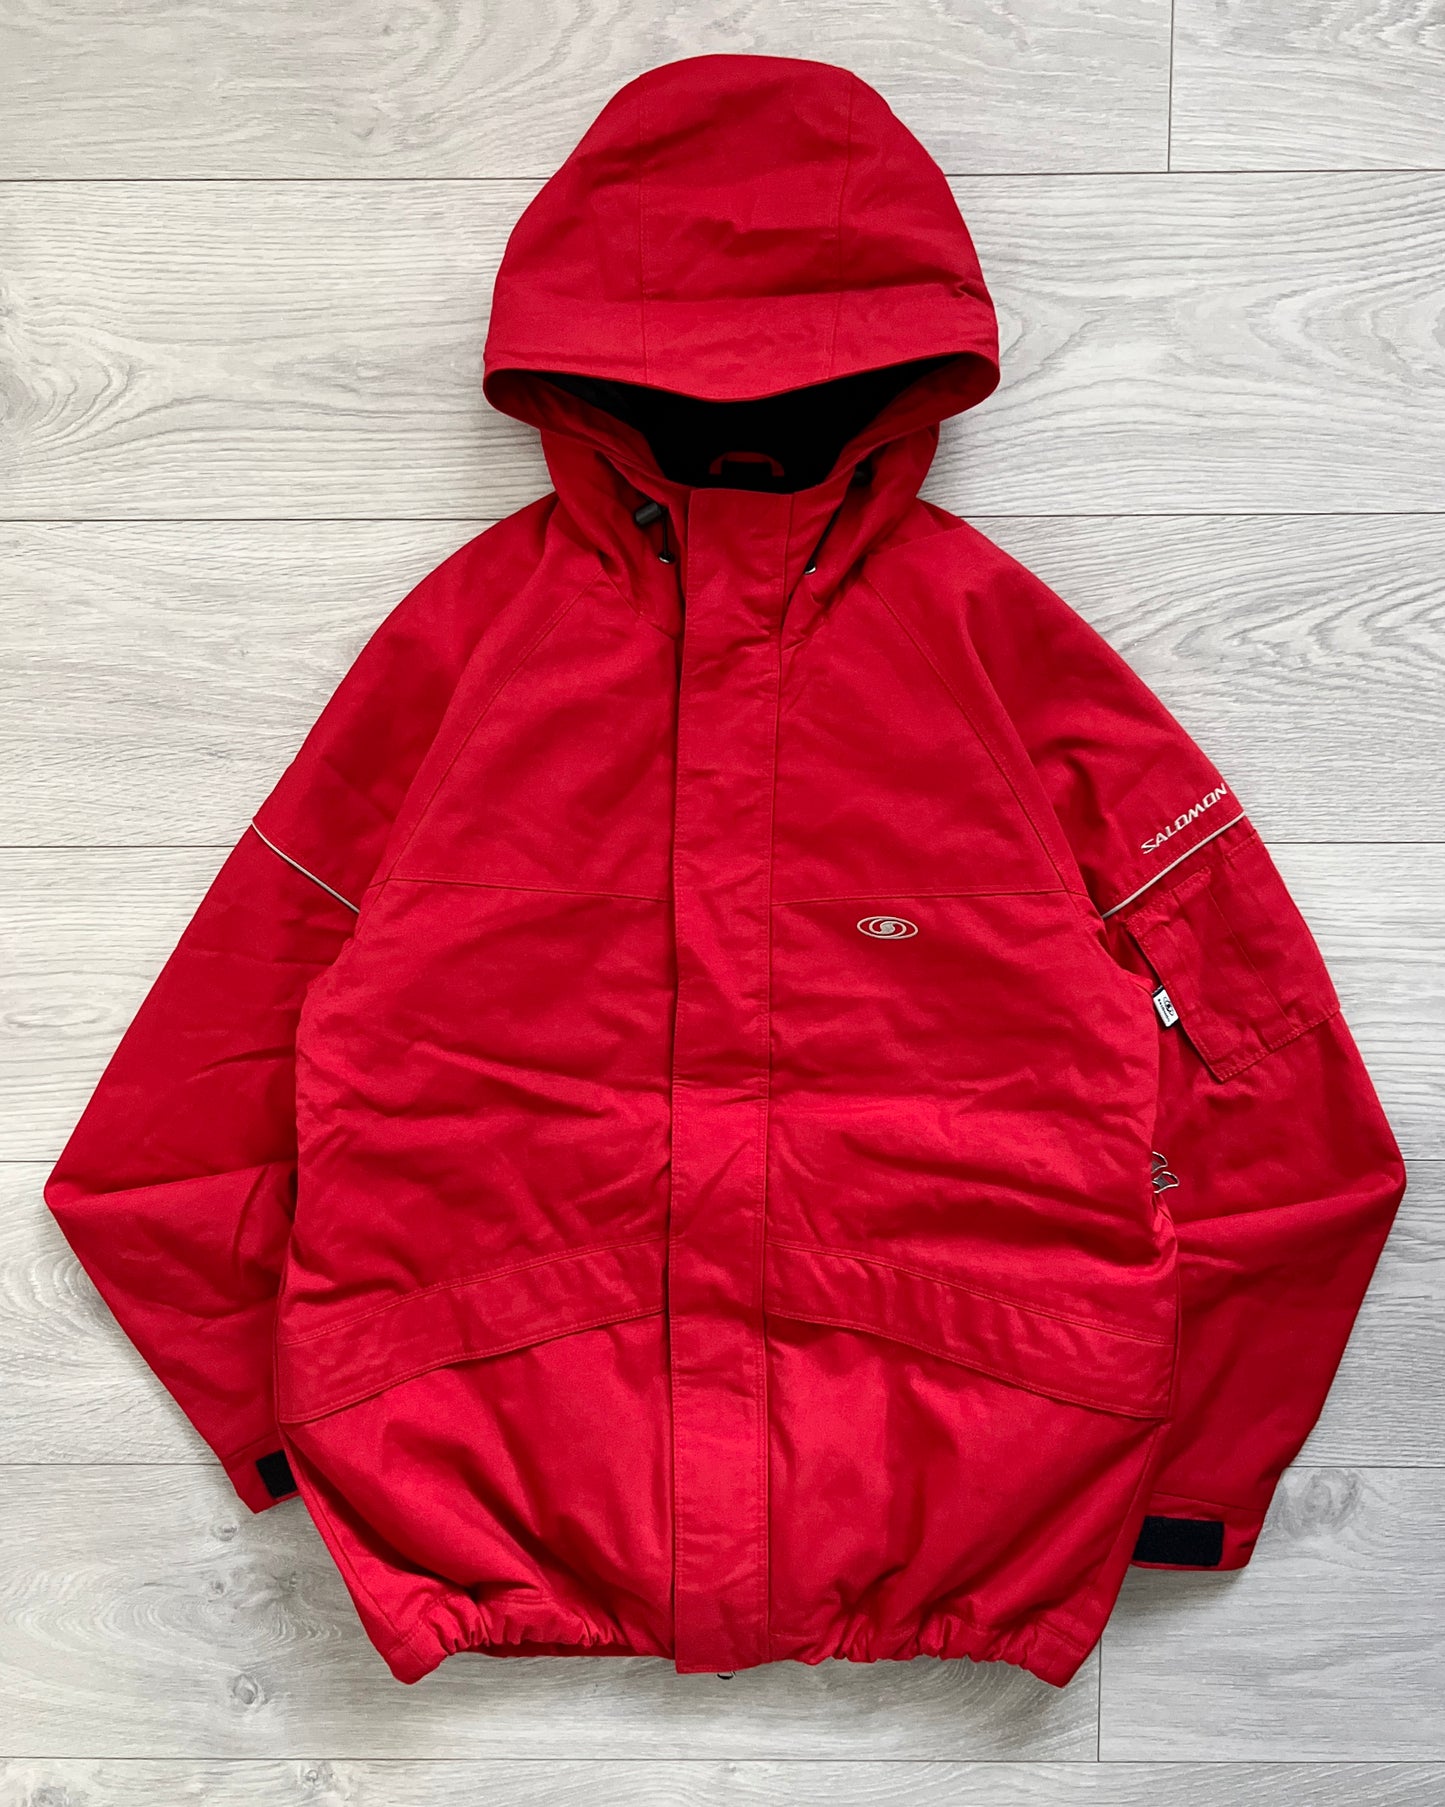 Salomon 1990s Fleece Lined Tech Ski Jacket - Size M